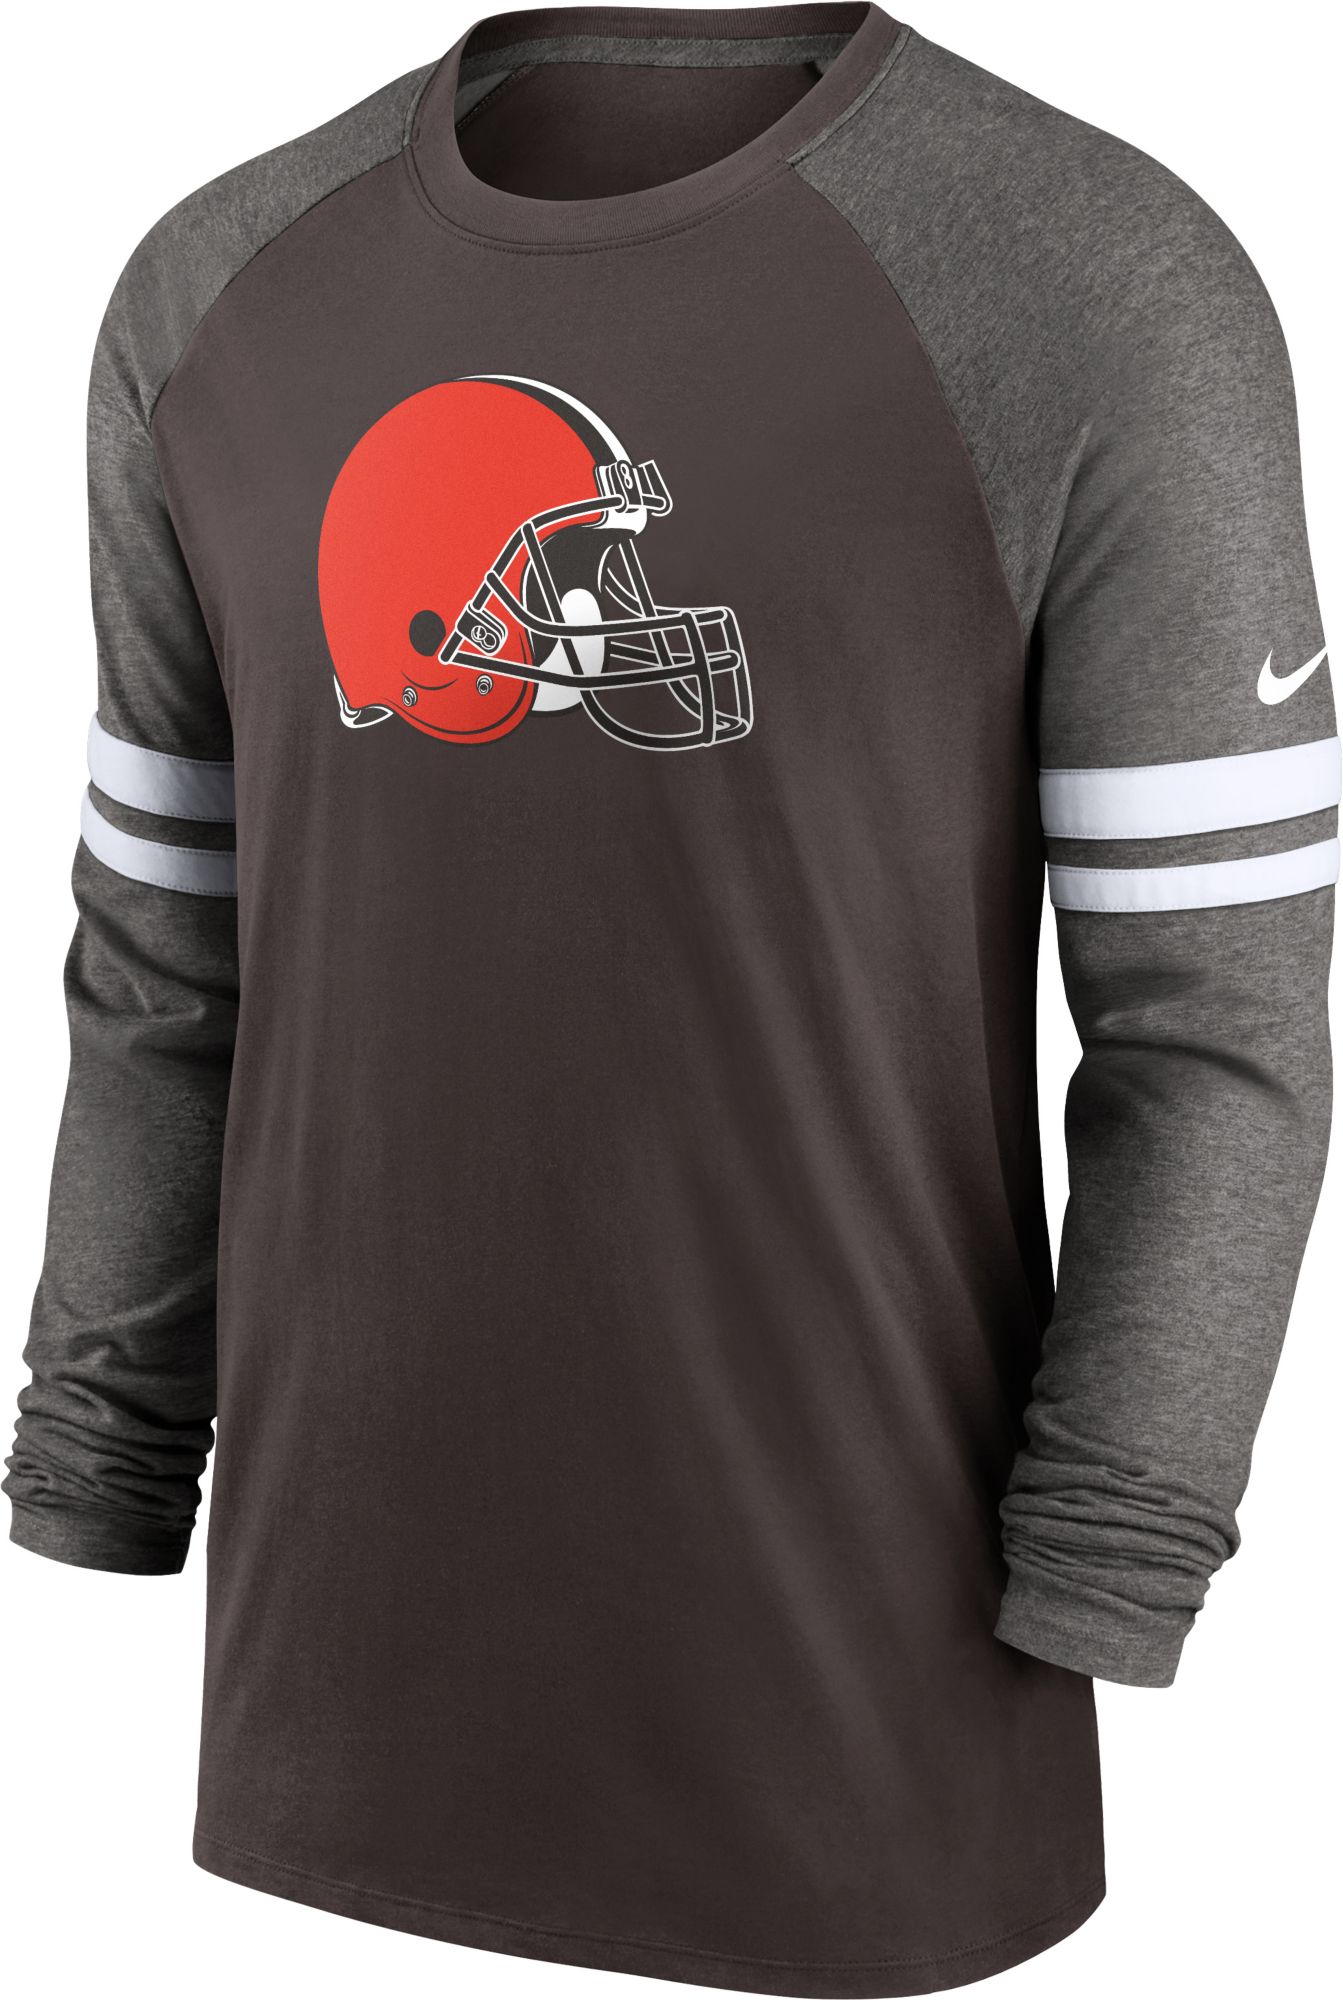 Nike / Men's Cleveland Browns Dri-FIT Brown Long Sleeve Raglan T-Shirt